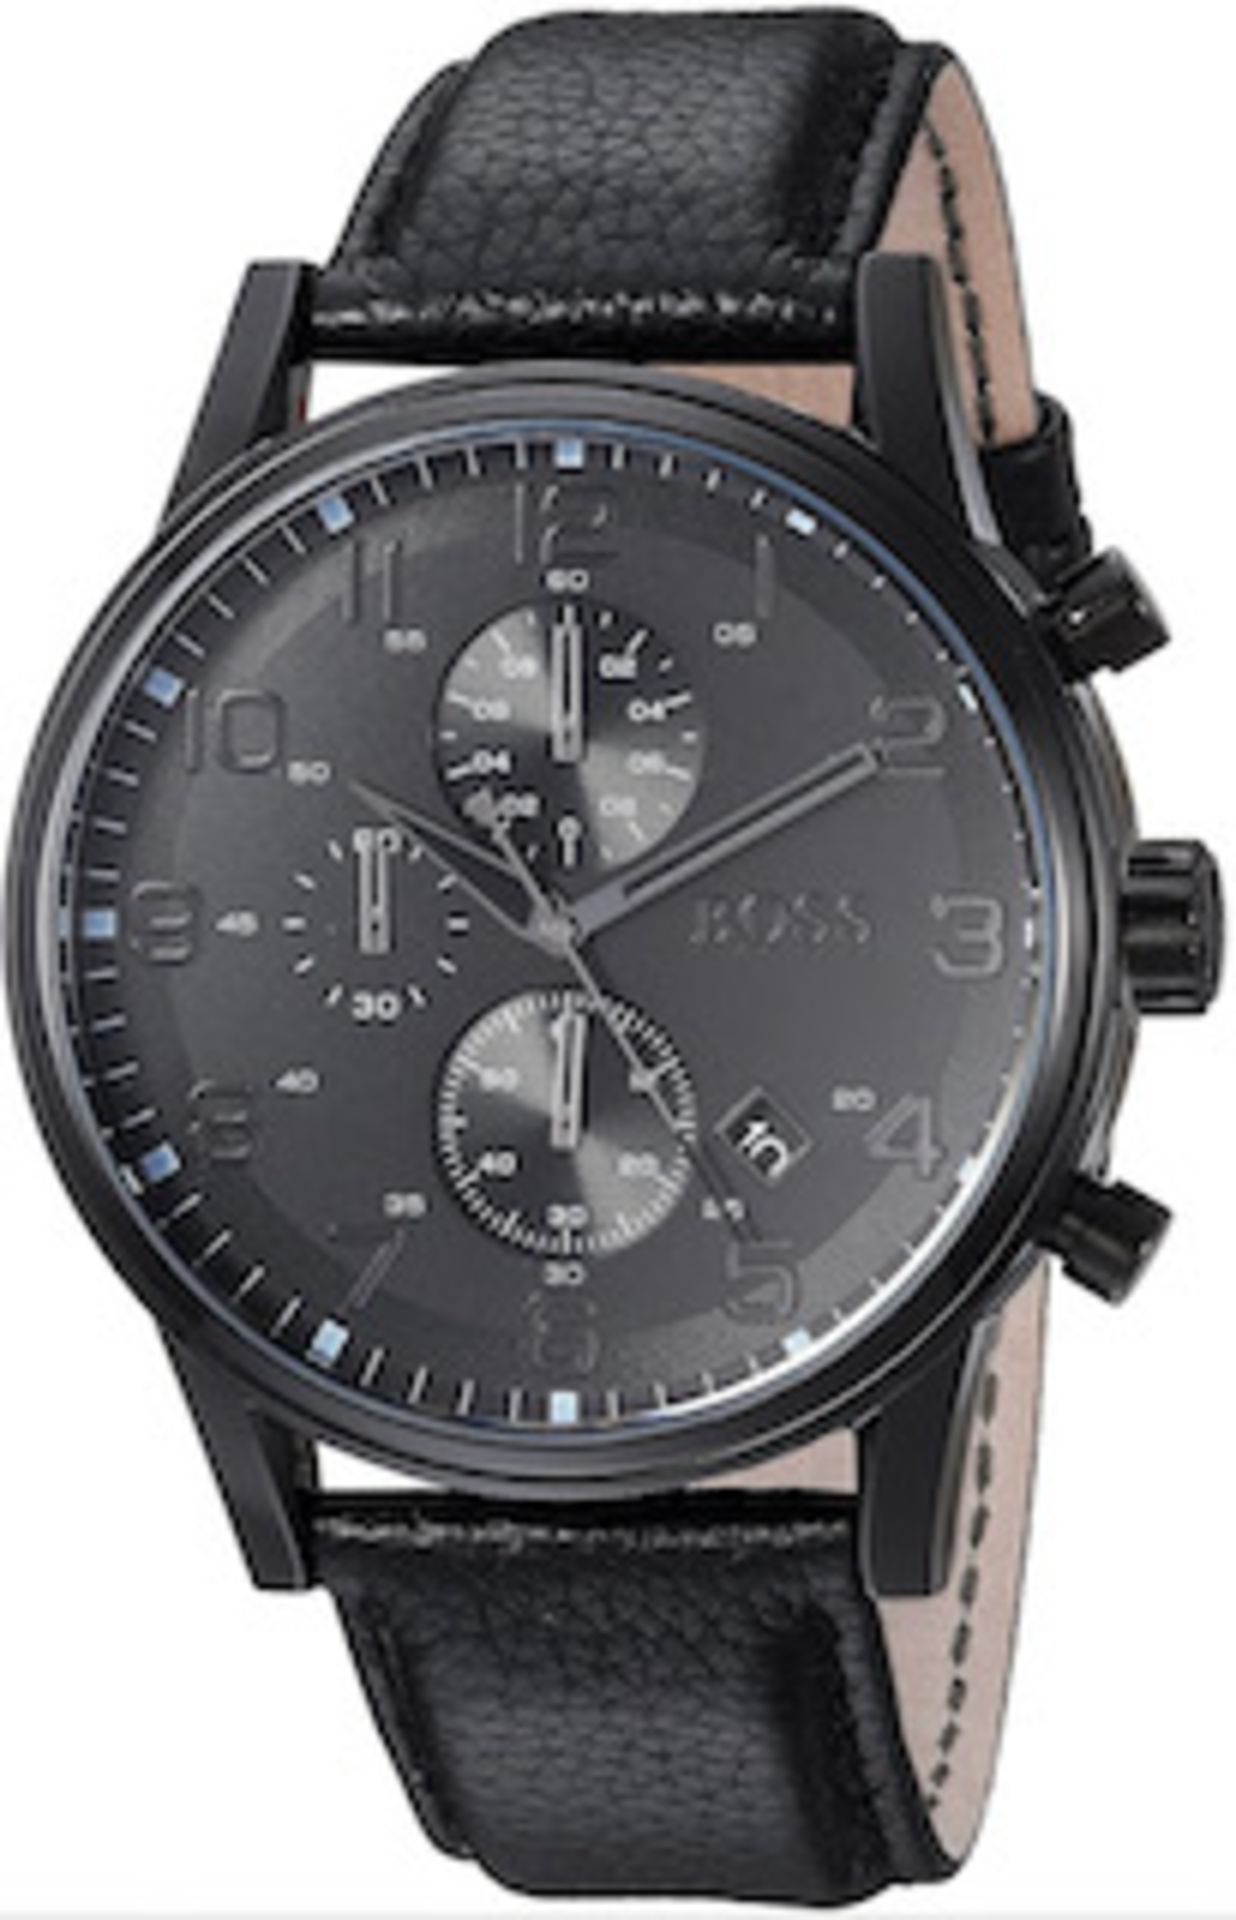 Hugo Boss 1512567 Men's Aeroliner Black Dial Black Leather Strap Chronograph Watch - Image 3 of 5